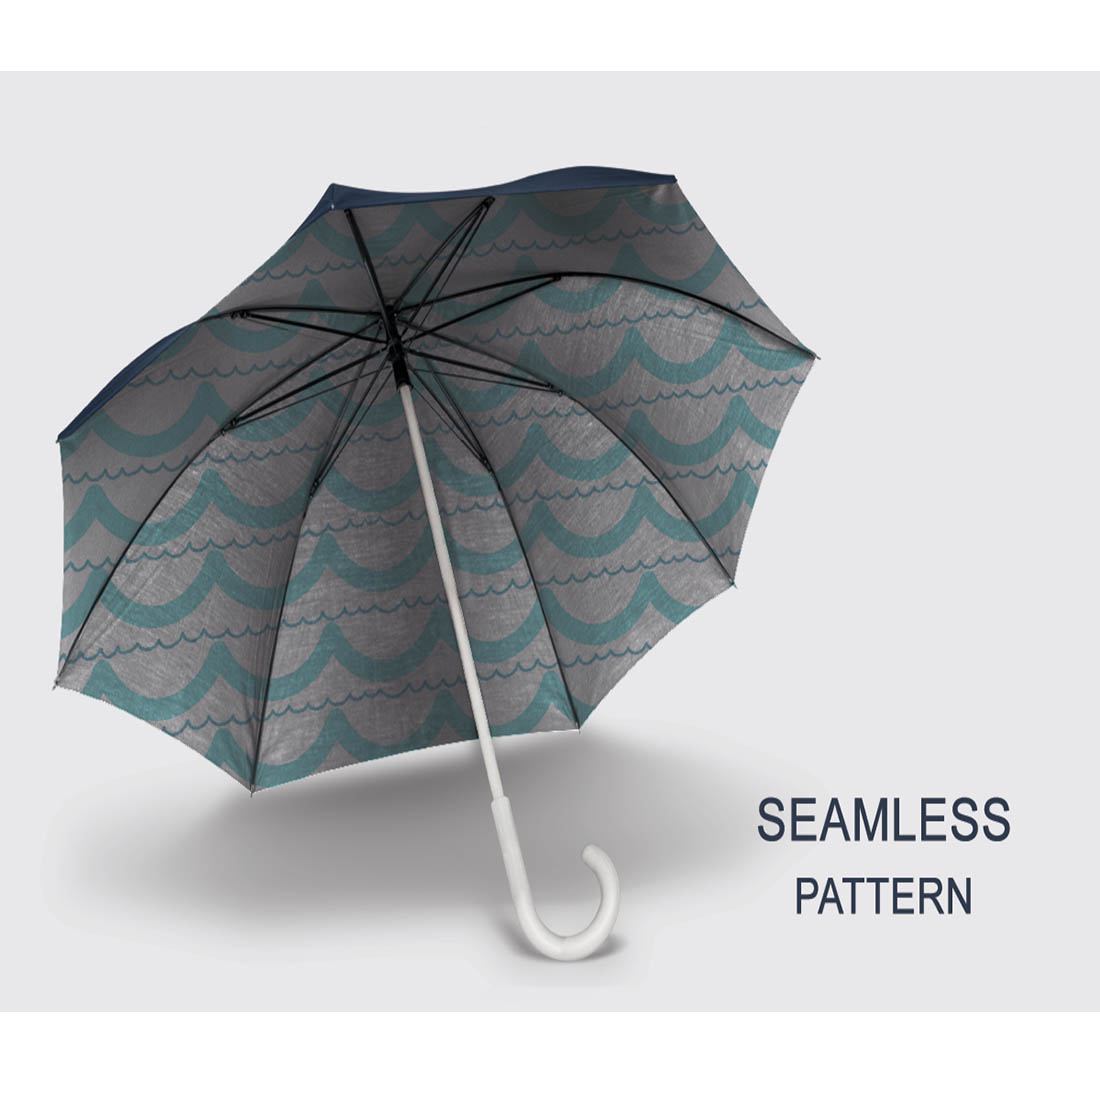 Ocean Seamless Pattern Design cover image.